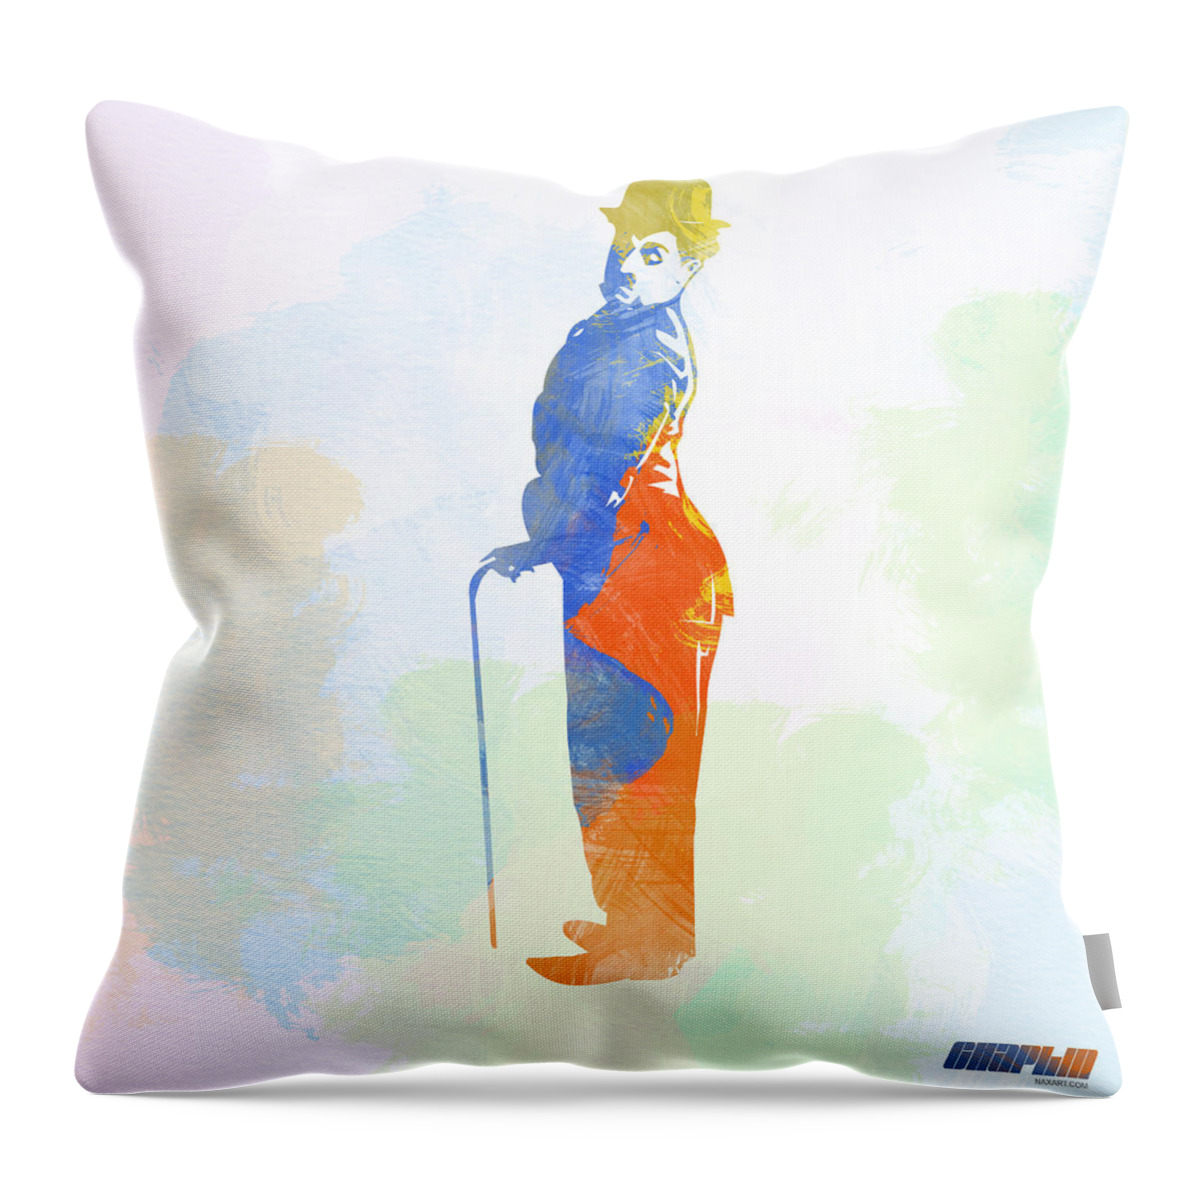 Charlie Chaplin Throw Pillow featuring the digital art Charlie Chaplin by Naxart Studio